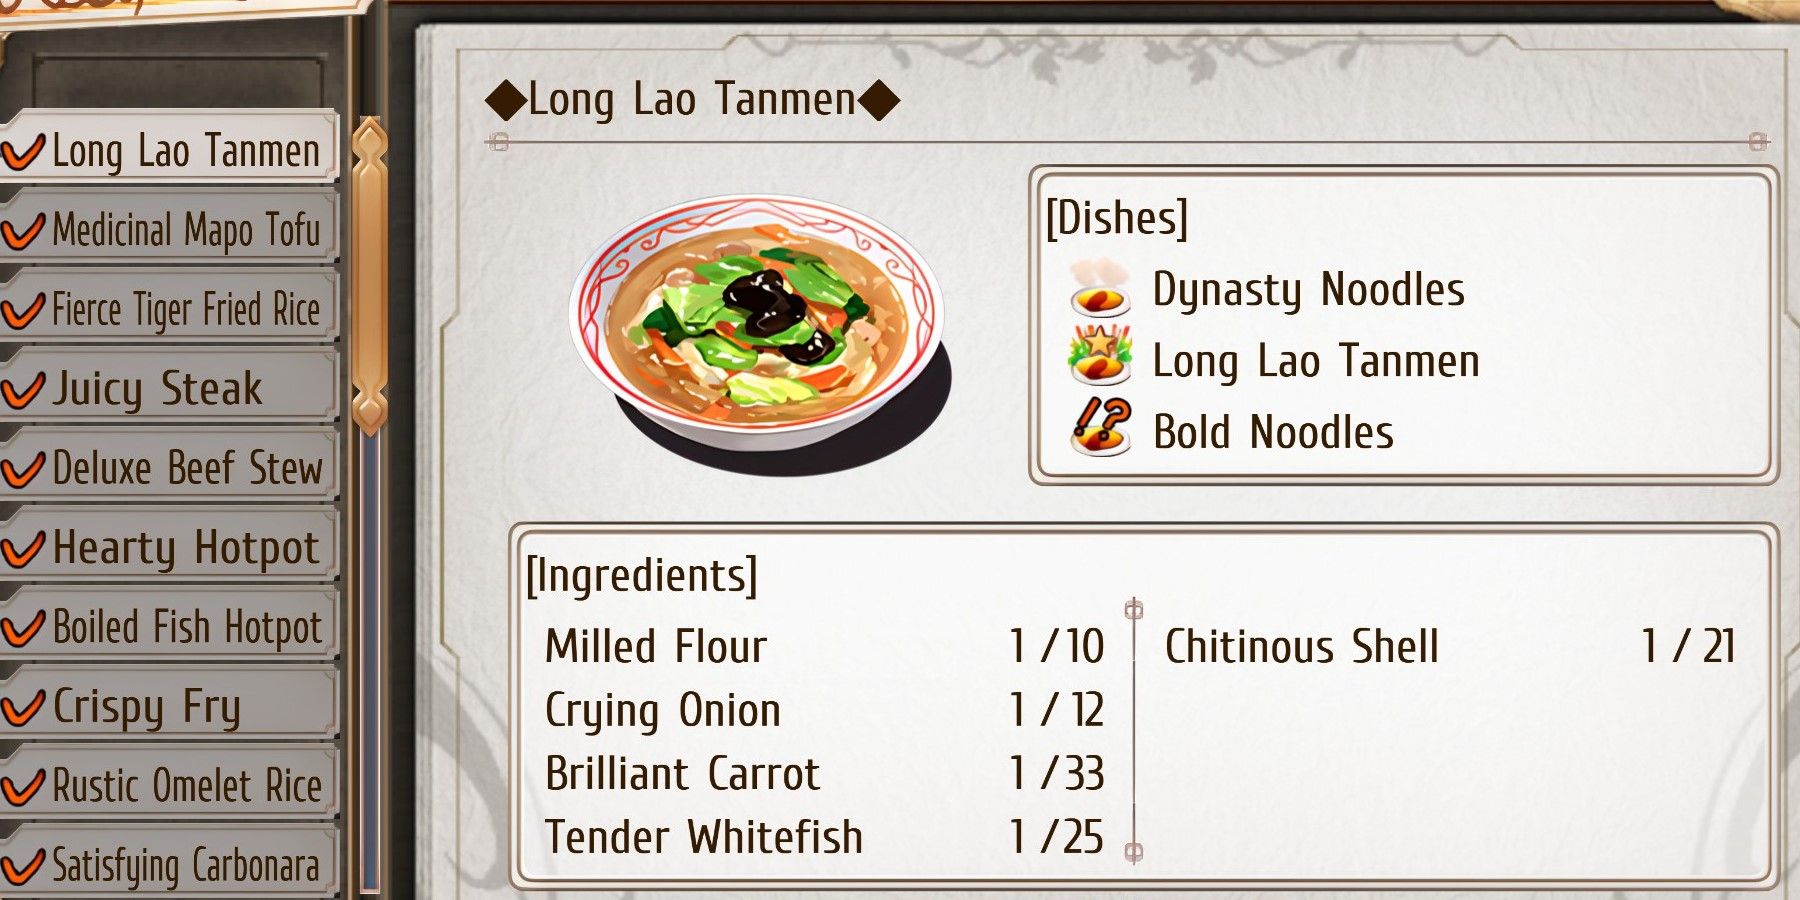 Long Lao Tanmen recipe list